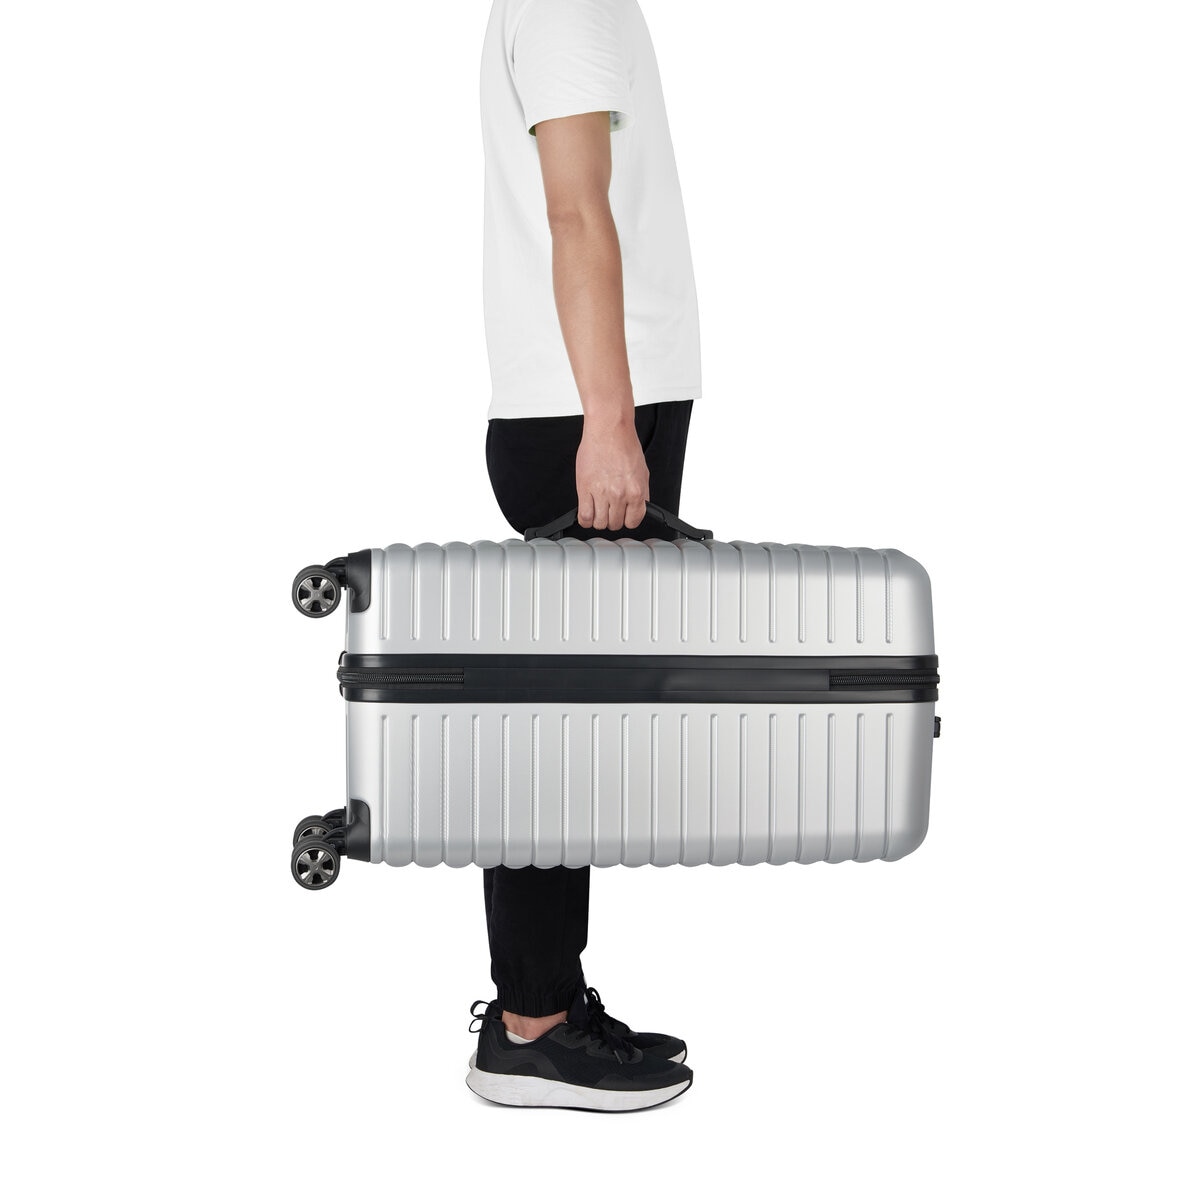 DELSEY スーツケース 2個セット | Costco Japan